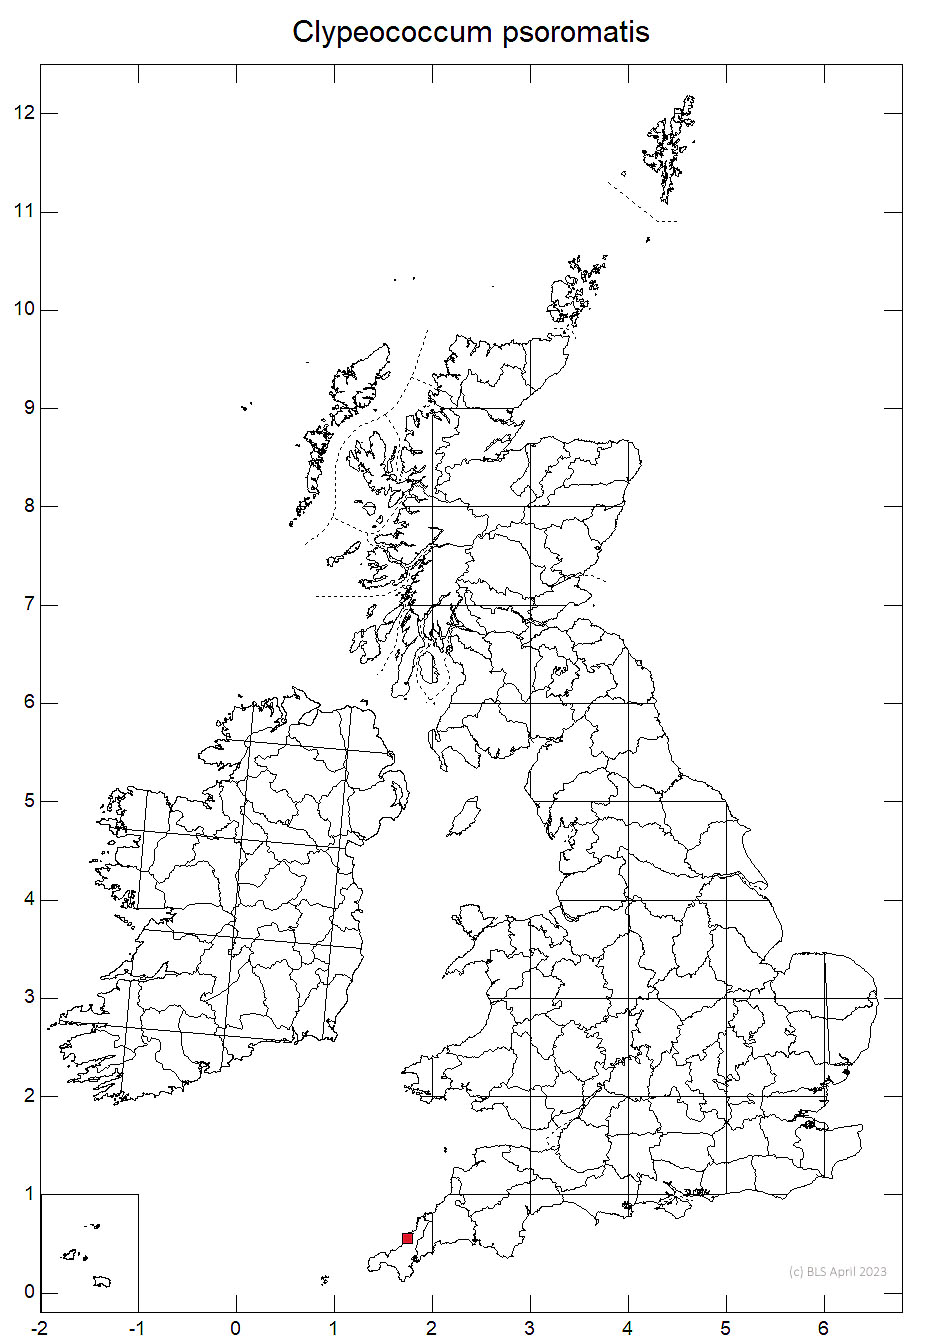 Clypeococcum psoromatis 10km sq distribution map